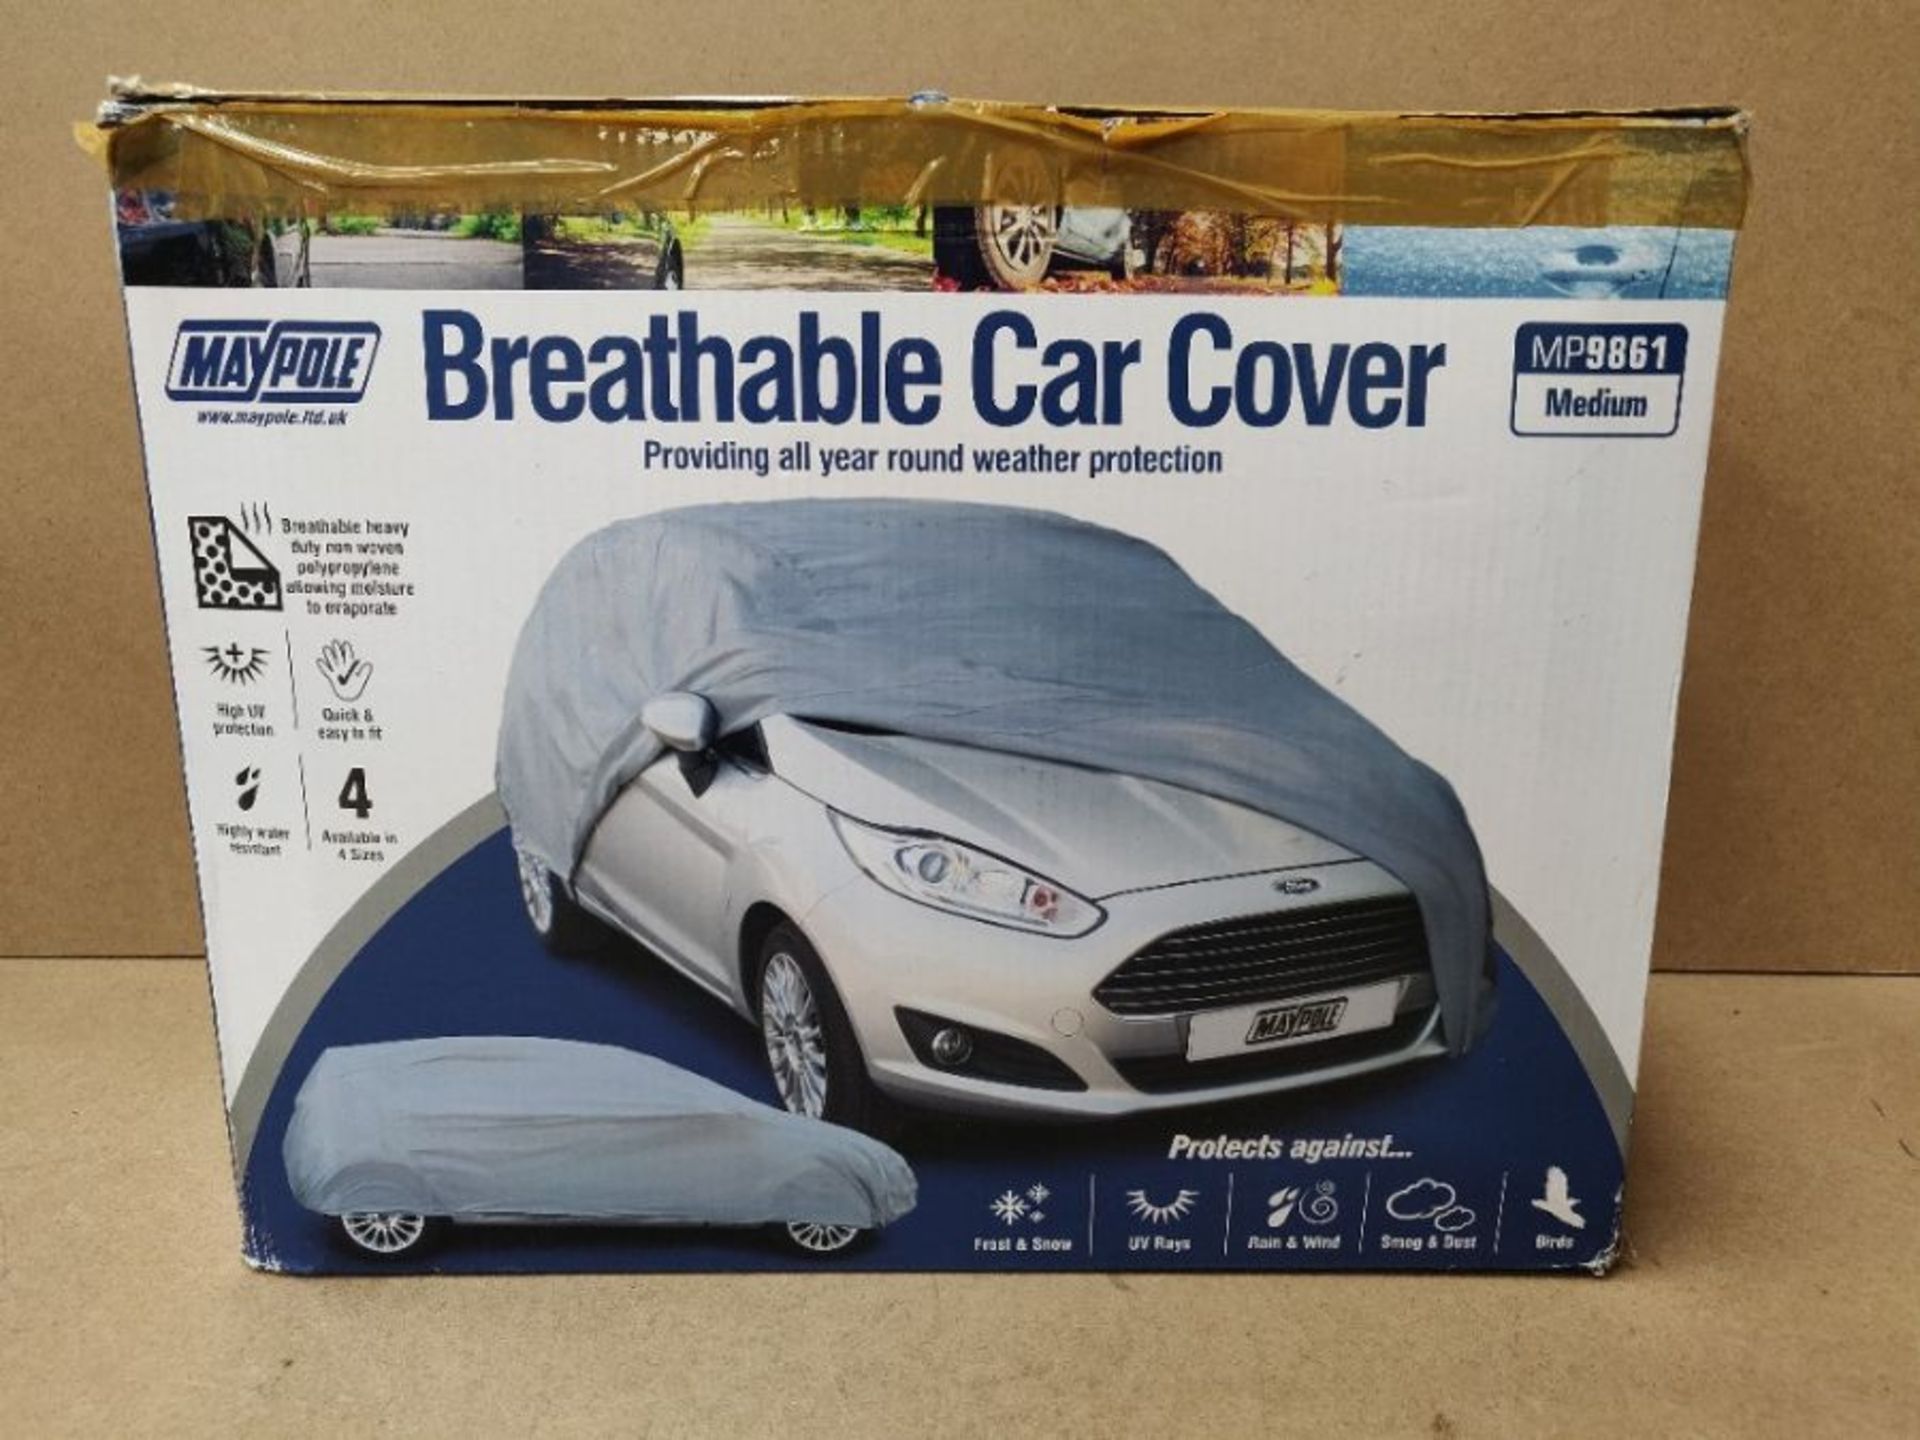 Maypole 9861 Breathable Full Car Cover, Grey, Medium - Image 2 of 3